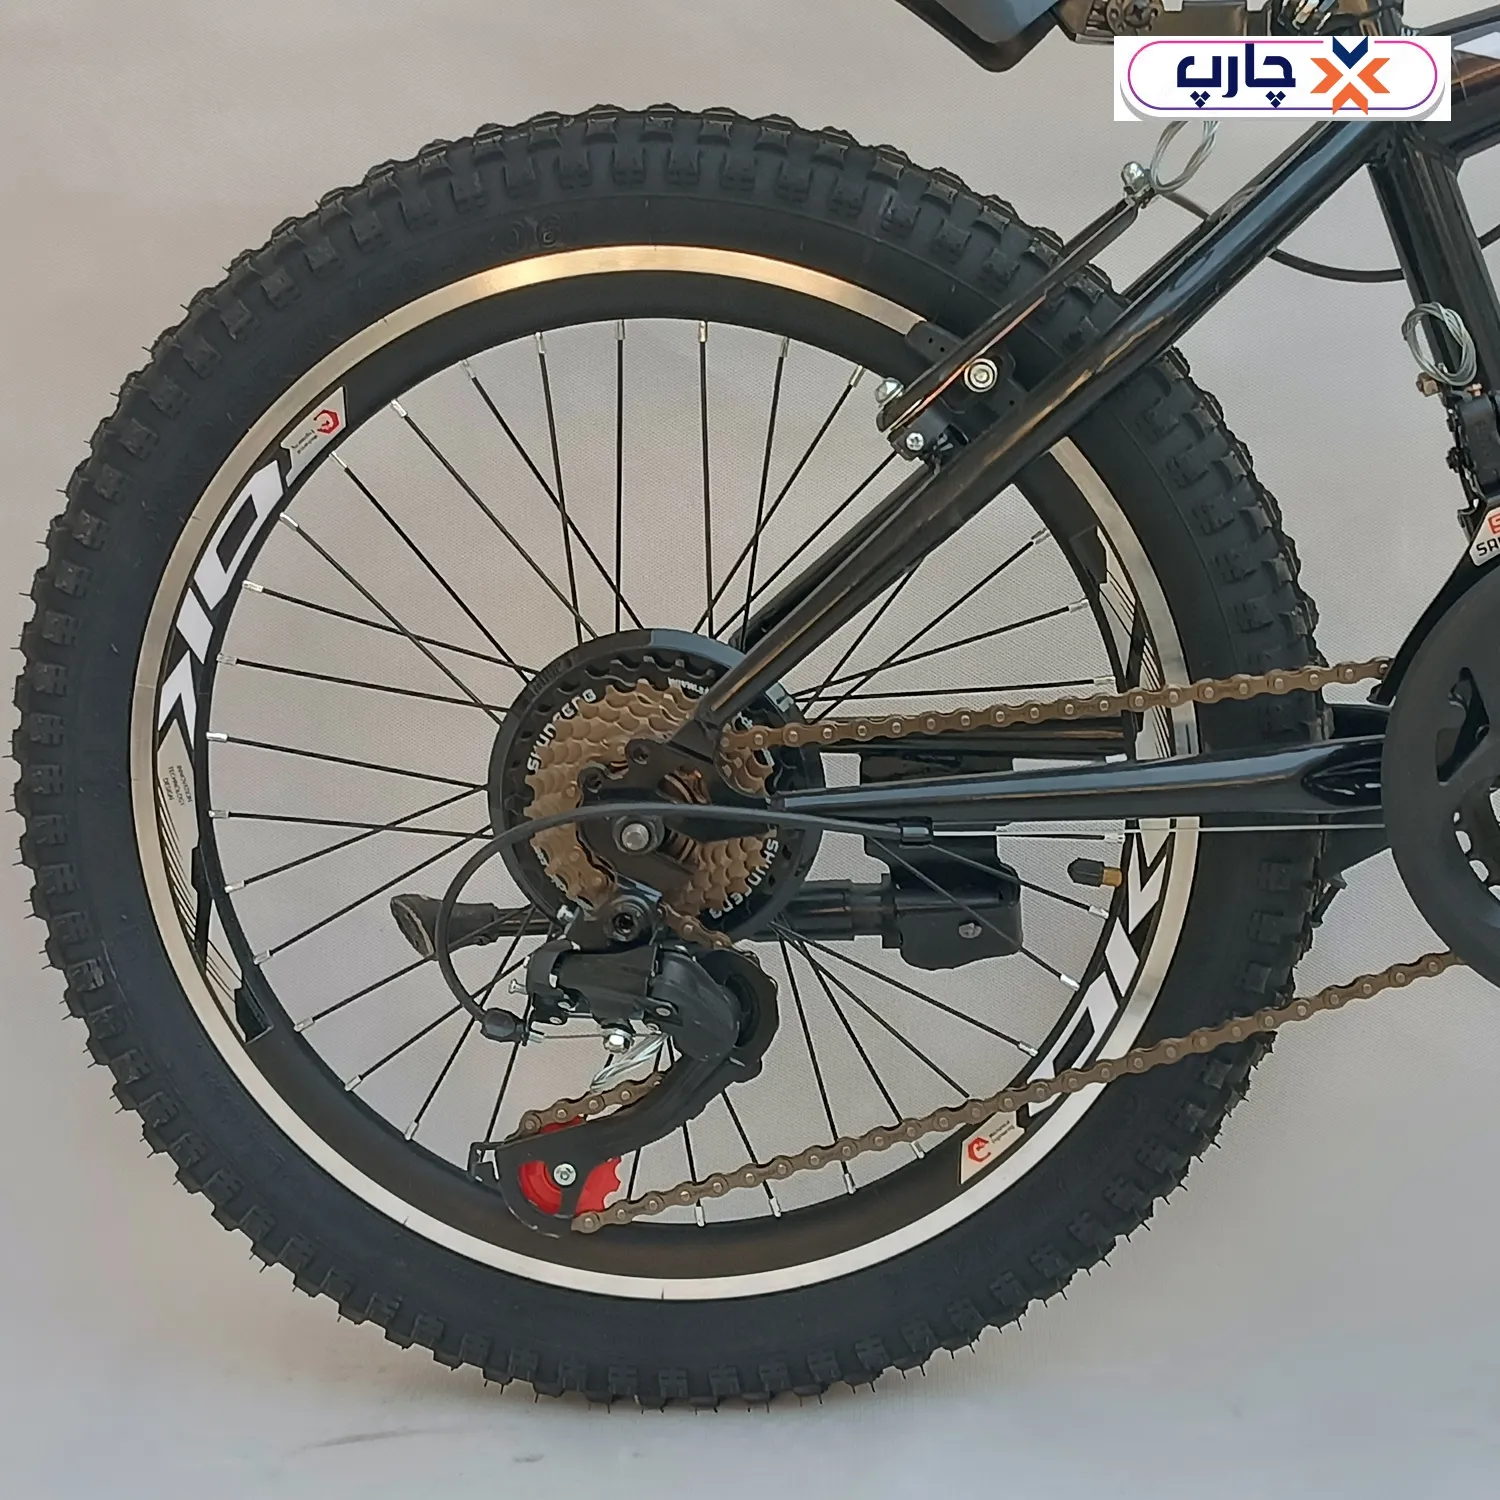 لاستیک دوچرخه طرح ویوا سایز 20 دنده کلاجدار مشکی